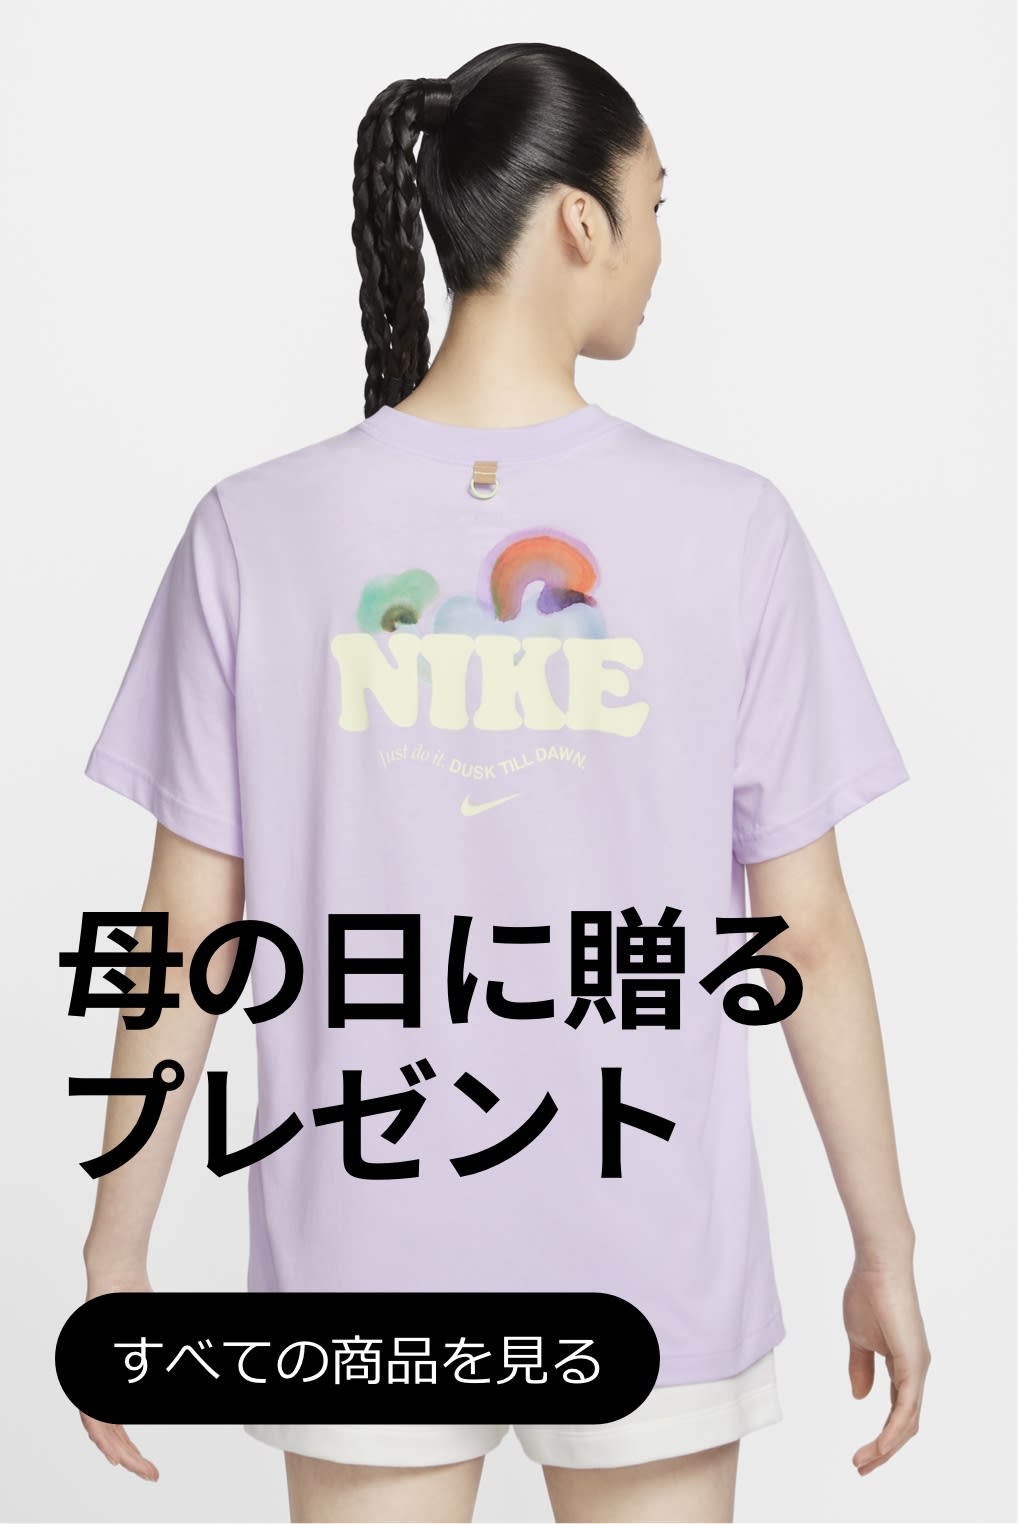 New Clothing. Nike JP